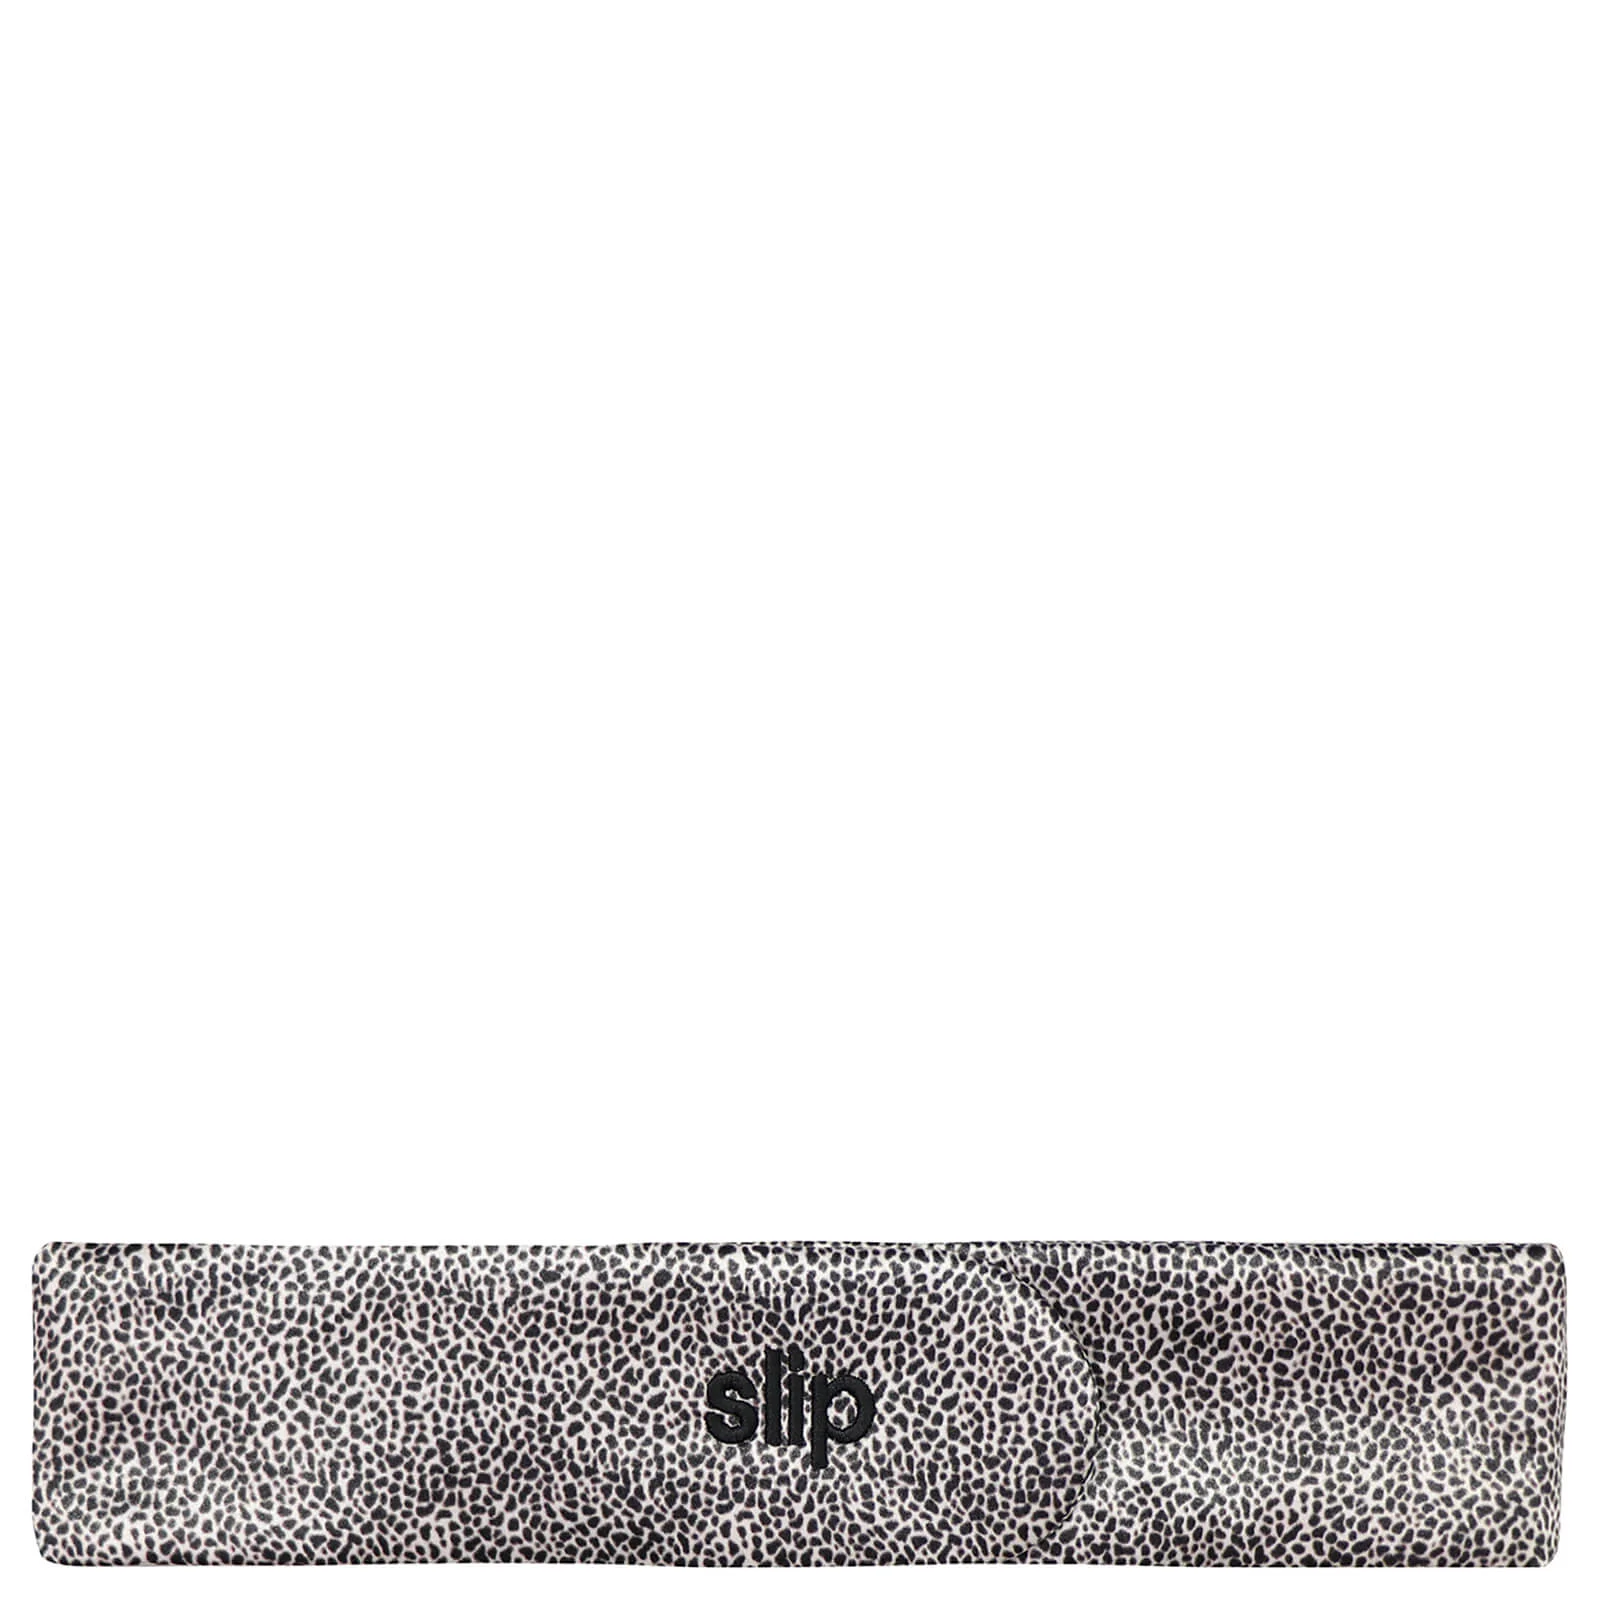 Slip Pure Silk Glam Band - Leopard Image 1